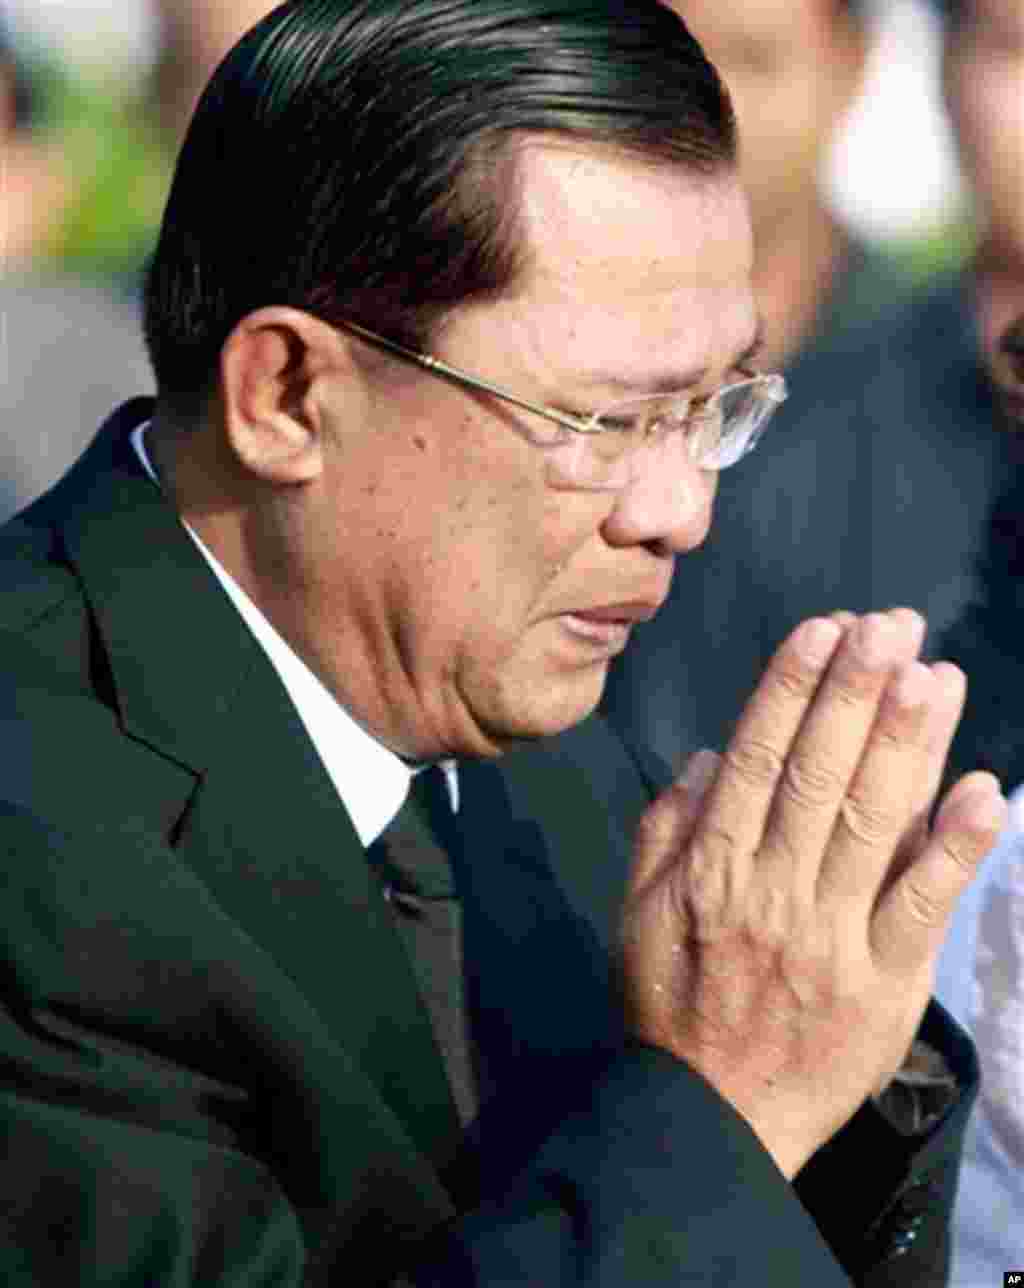 Cambodia's Prime Minister Hun Sen weeps during a memorial service near a bridge where festival goers were killed Monday in a stampede in Phnom Penh, Cambodia, Thursday, Nov. 25, 2010. (AP Photo/Heng Sinith)